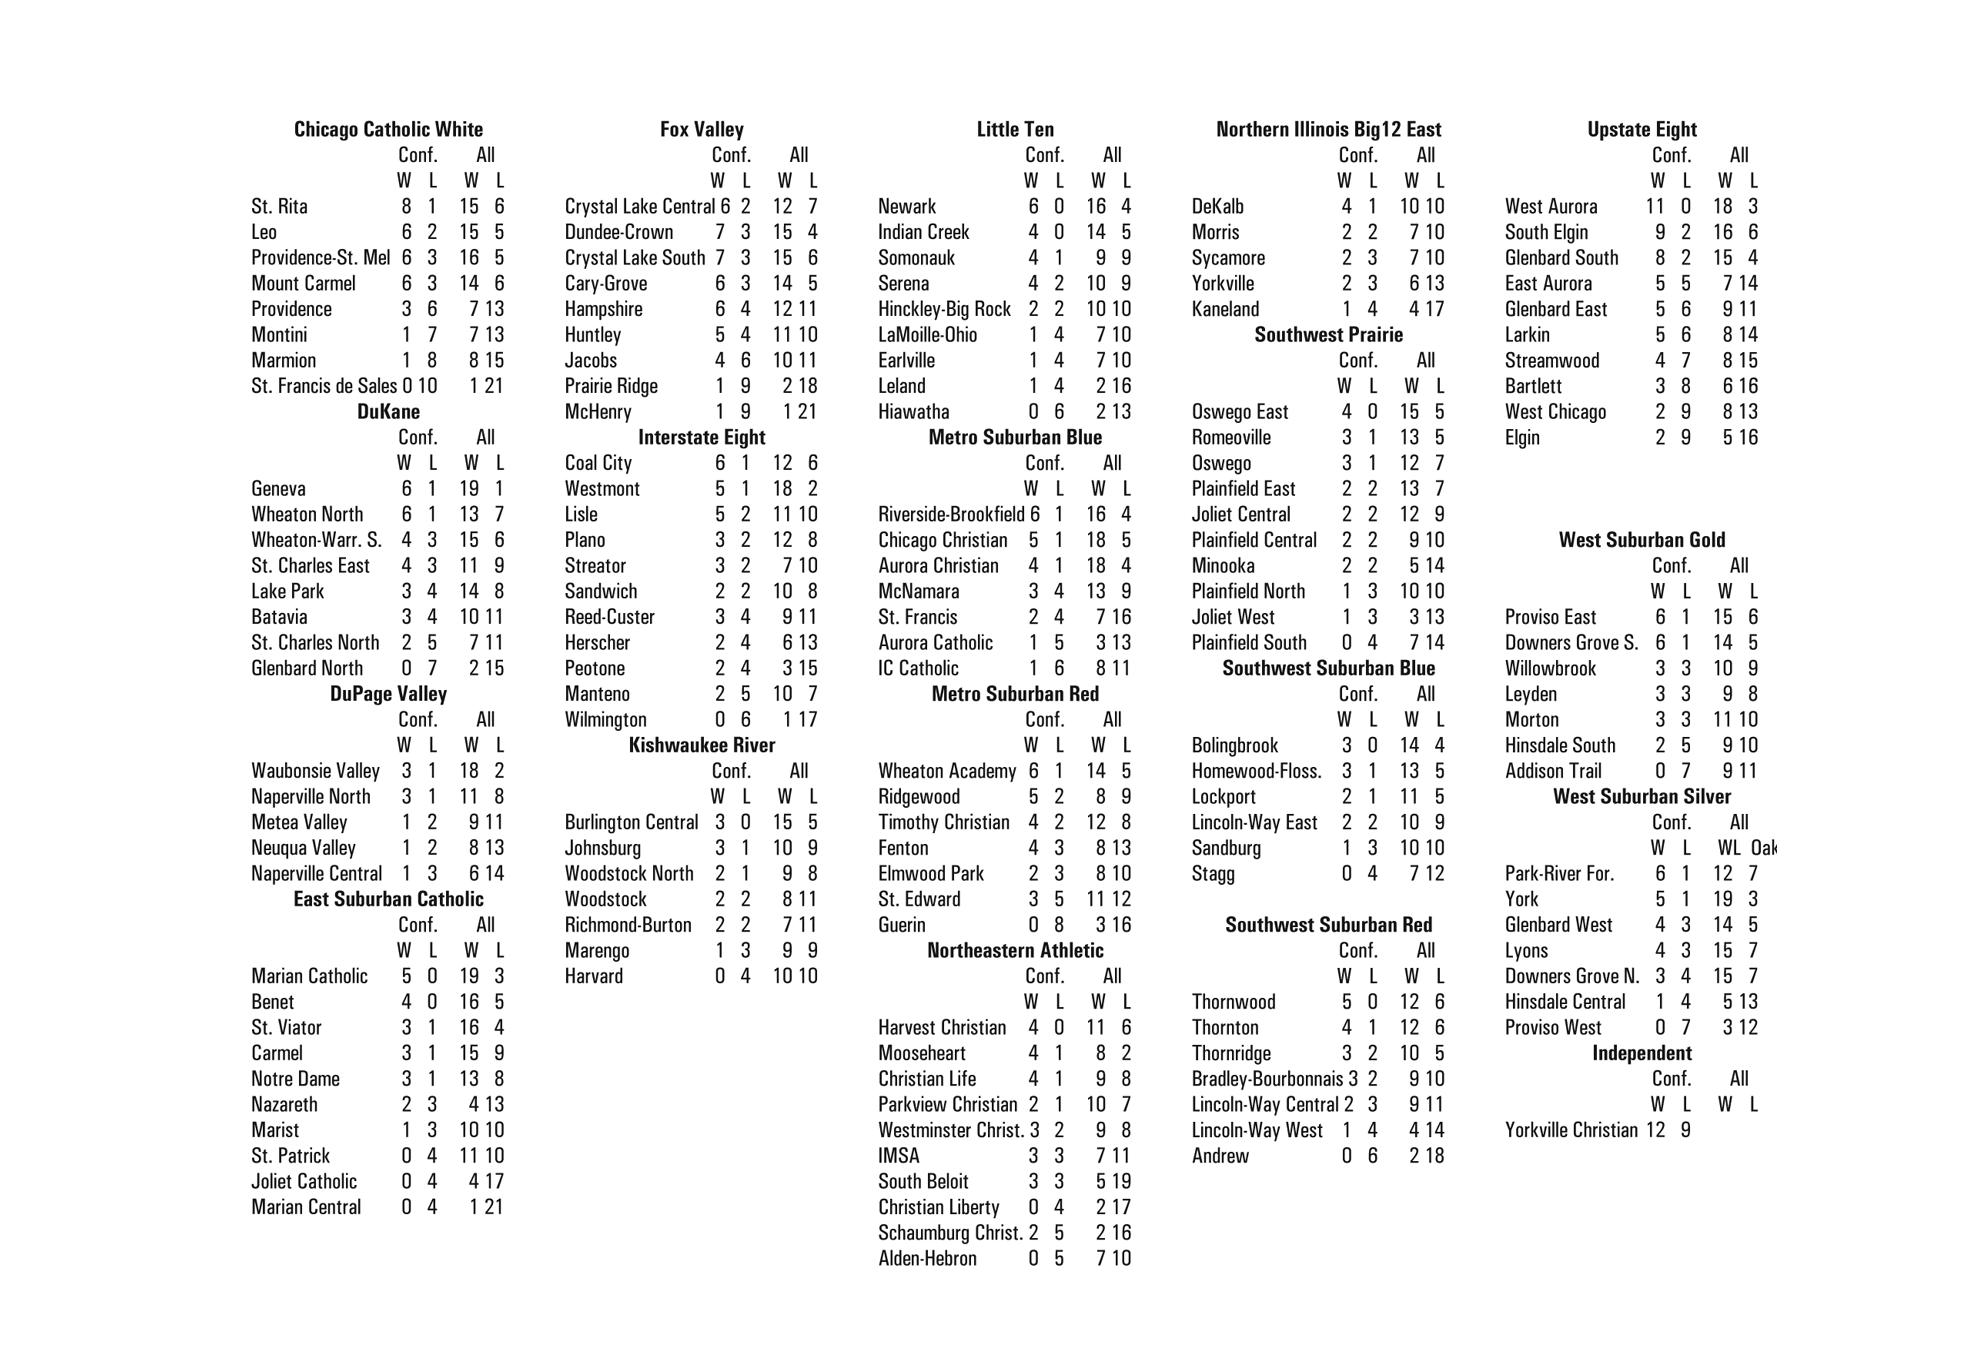 Boys High School Basketball Mid-Season Conference Standings through January 21